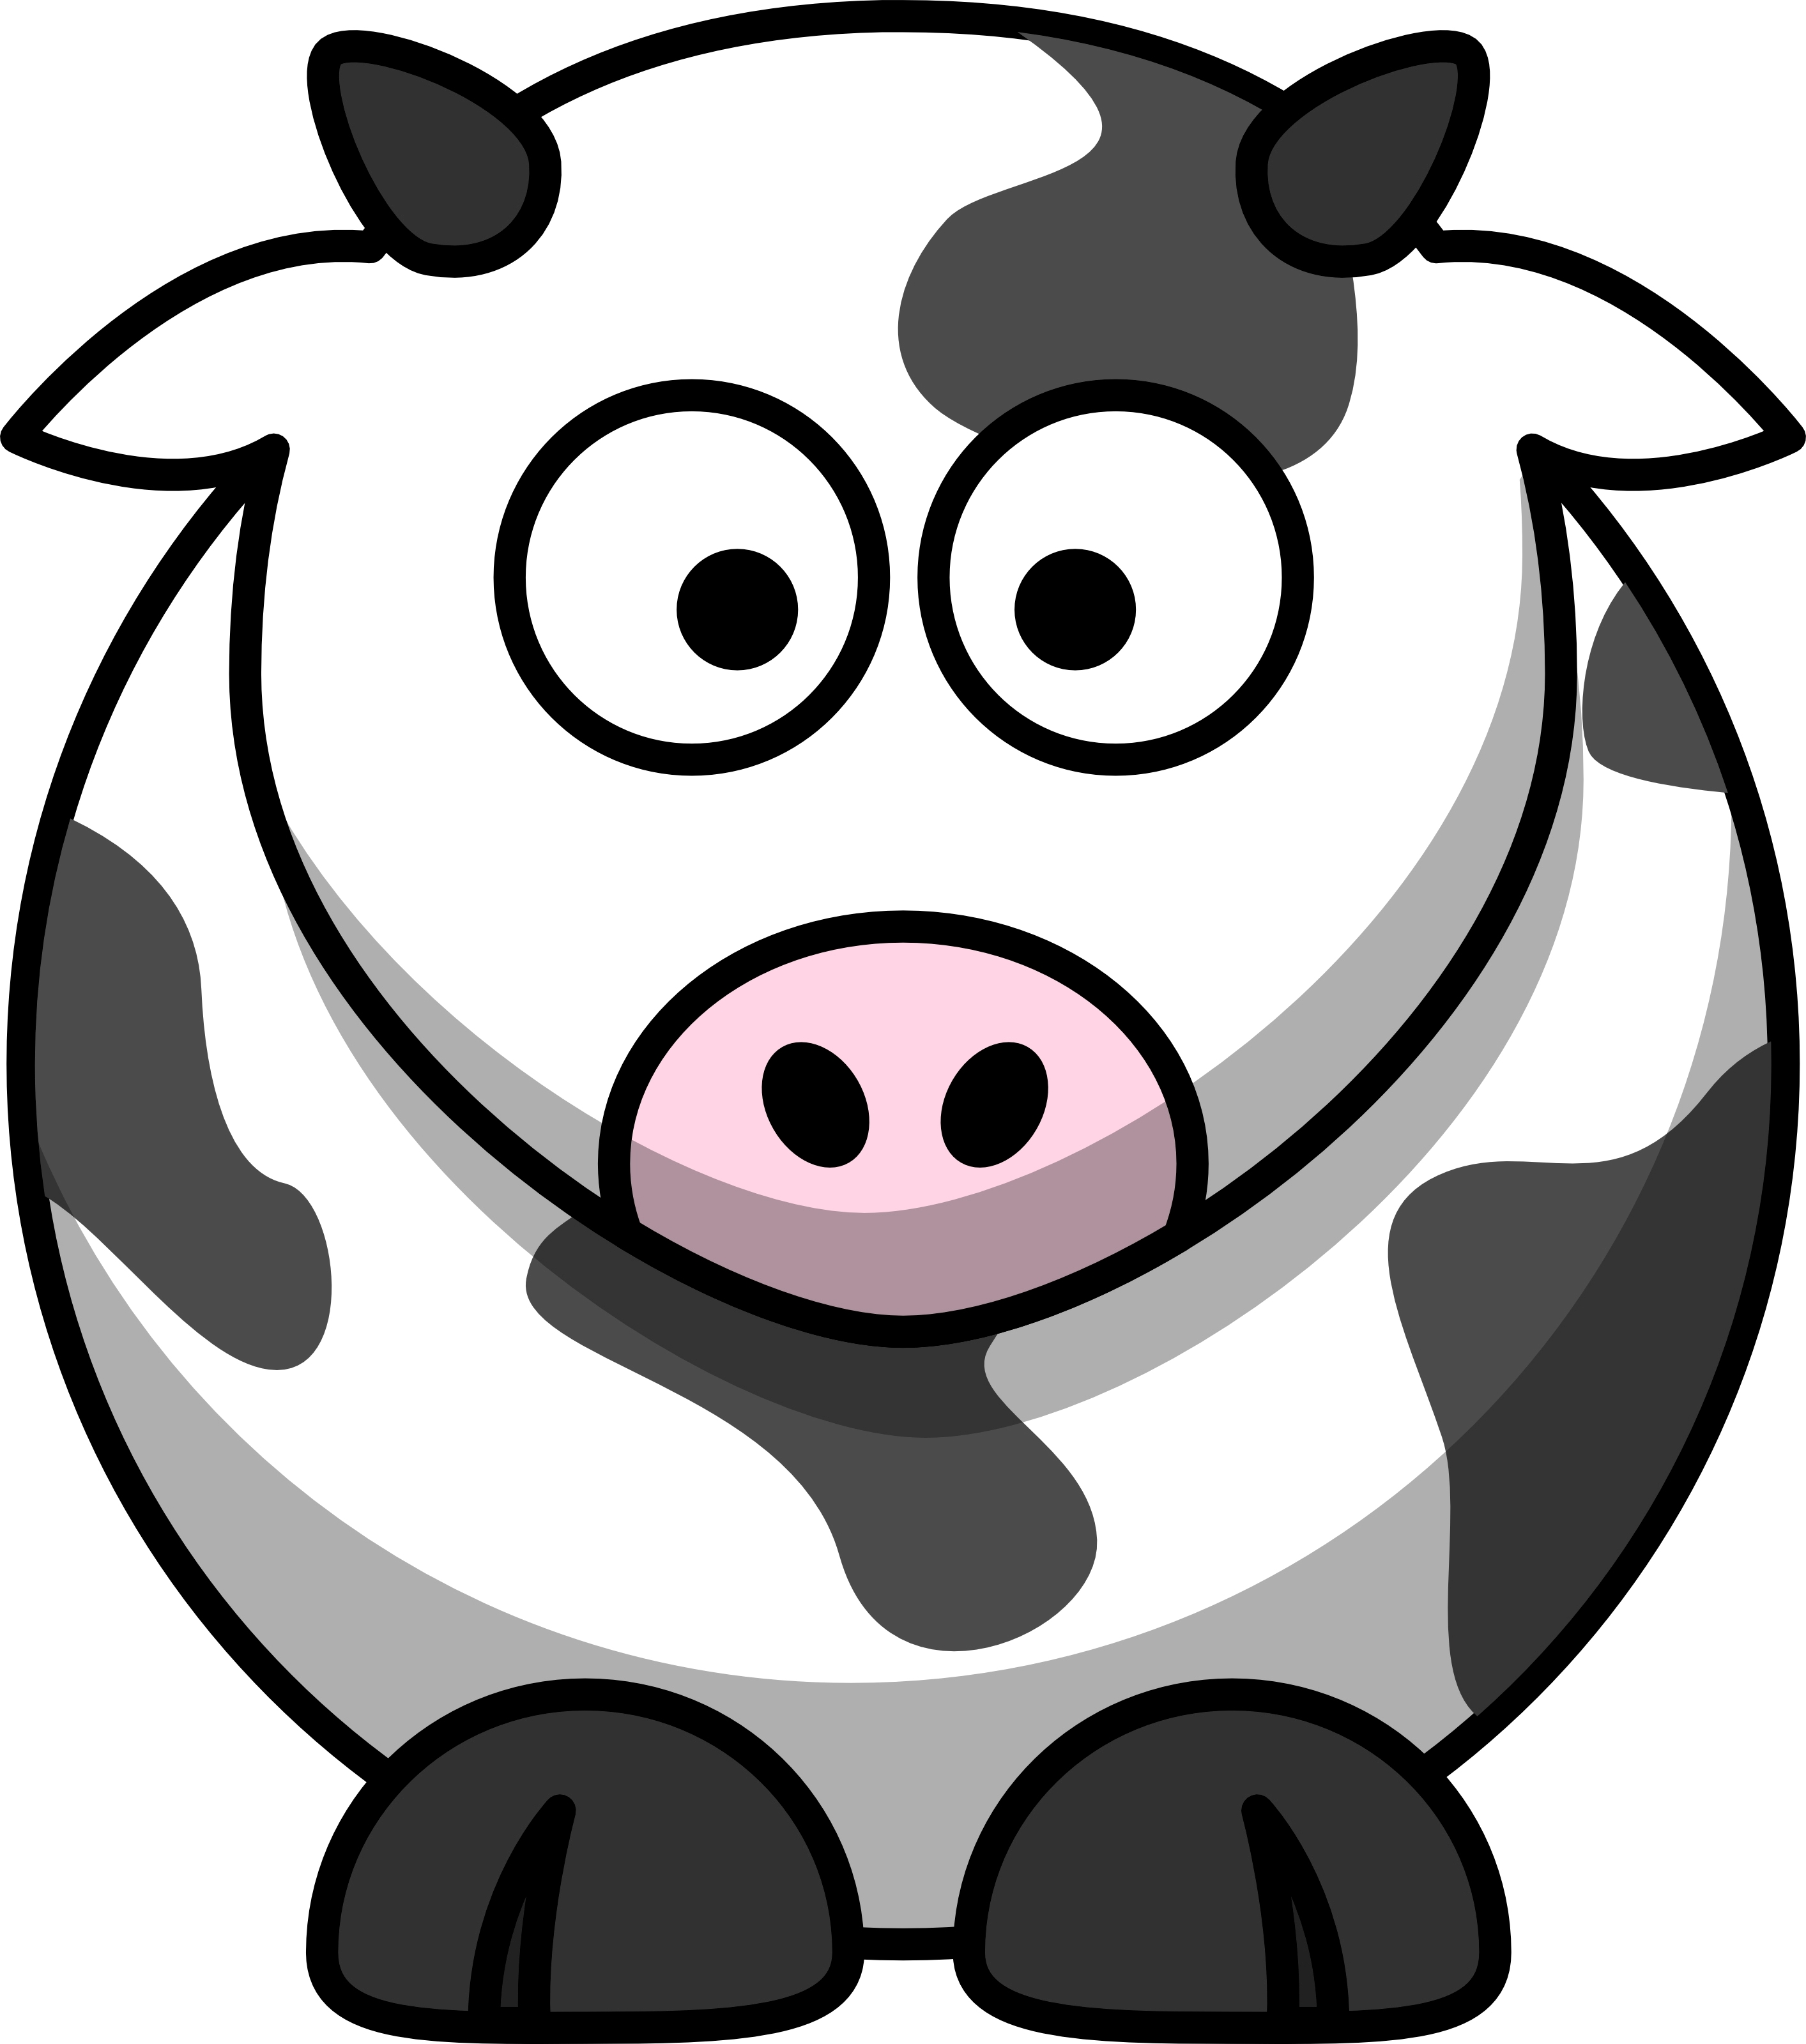 Clipart - Pig, Cow - Clipart Images